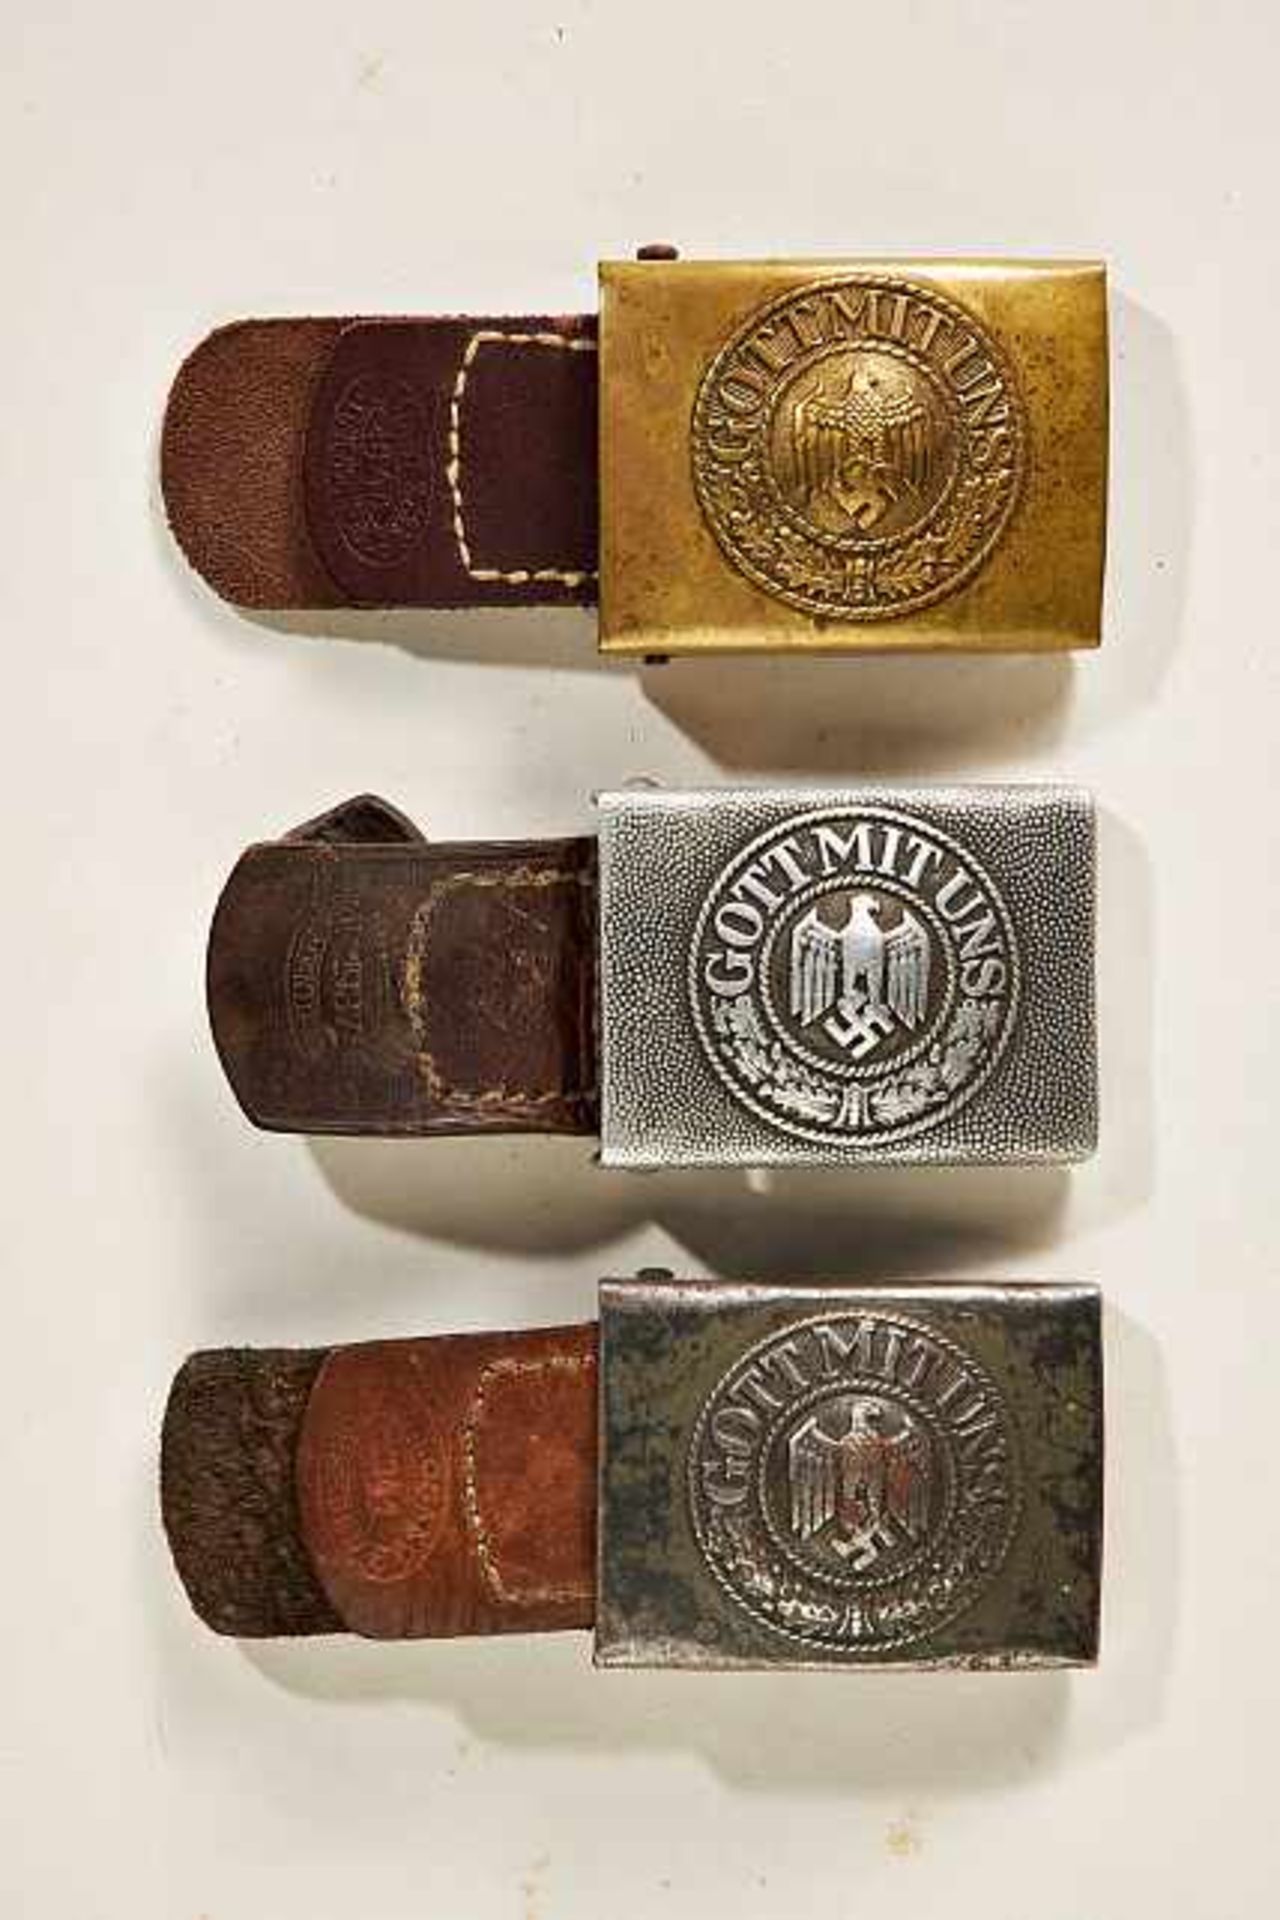 Deutsches Reich 1933 - 1945 - Heer : Army Belt Buckle.Belt buckle shows wear/age and comes